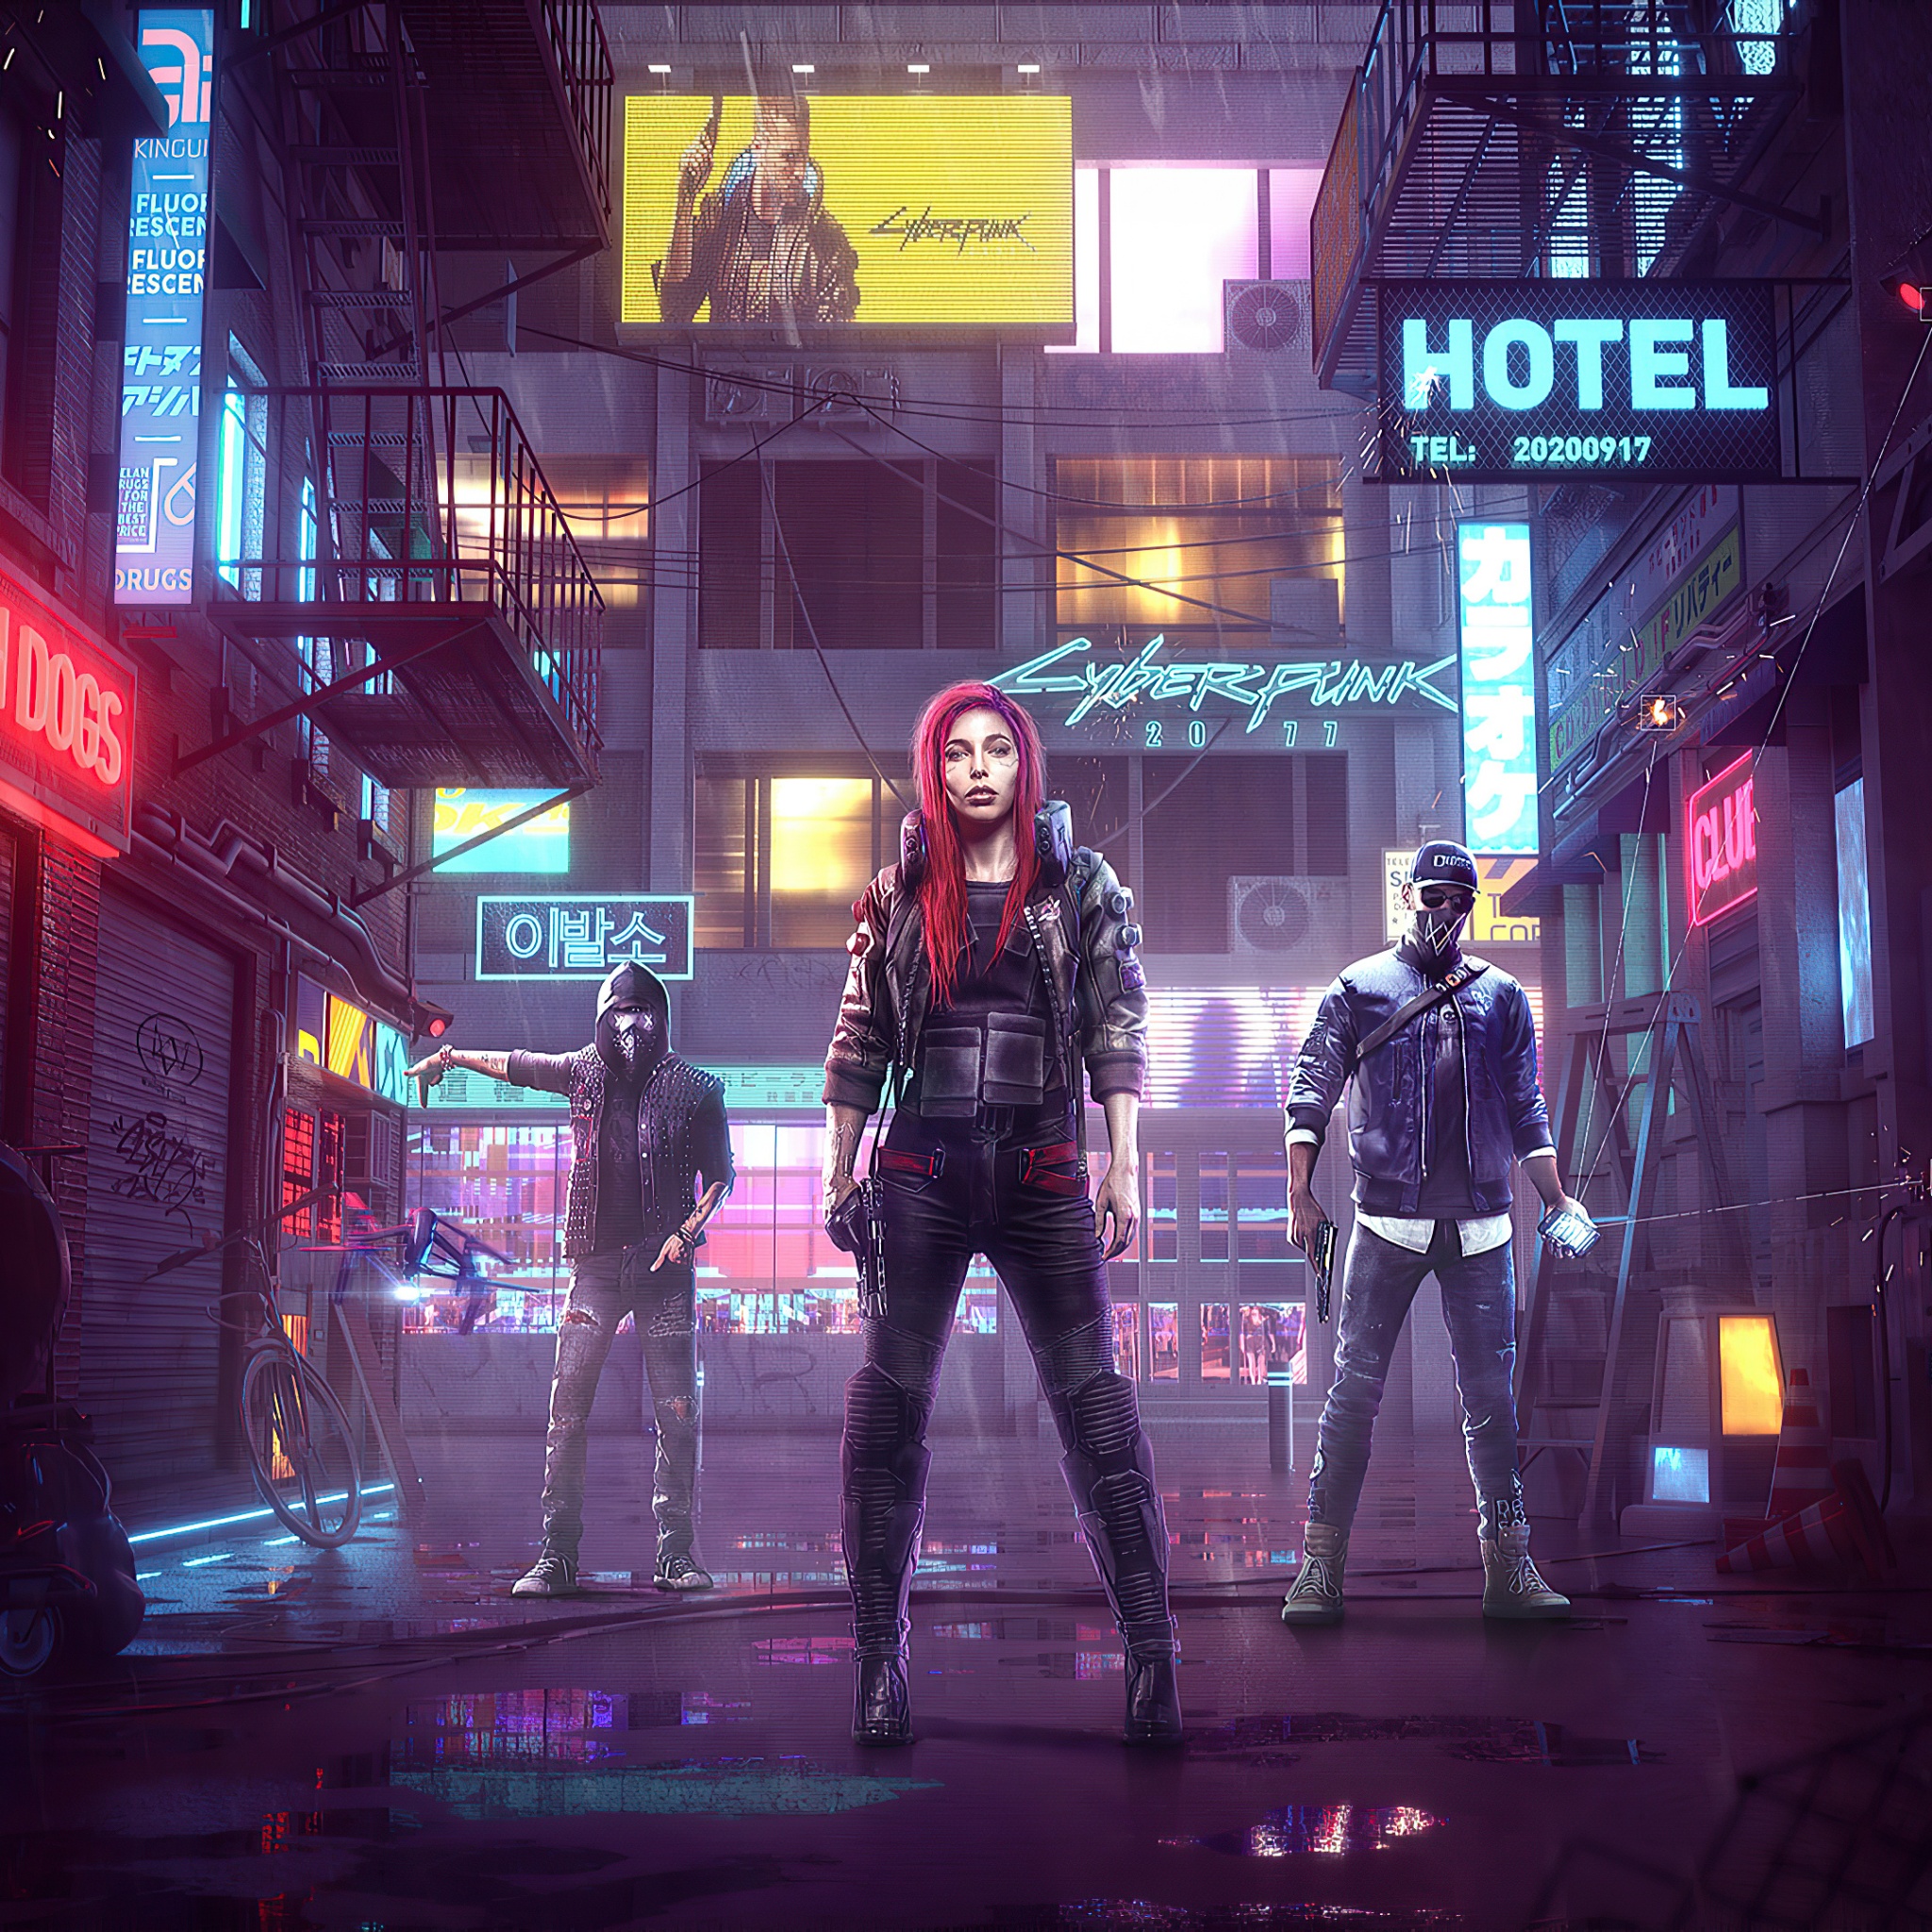 Download Cyberpunk City Wallpaper